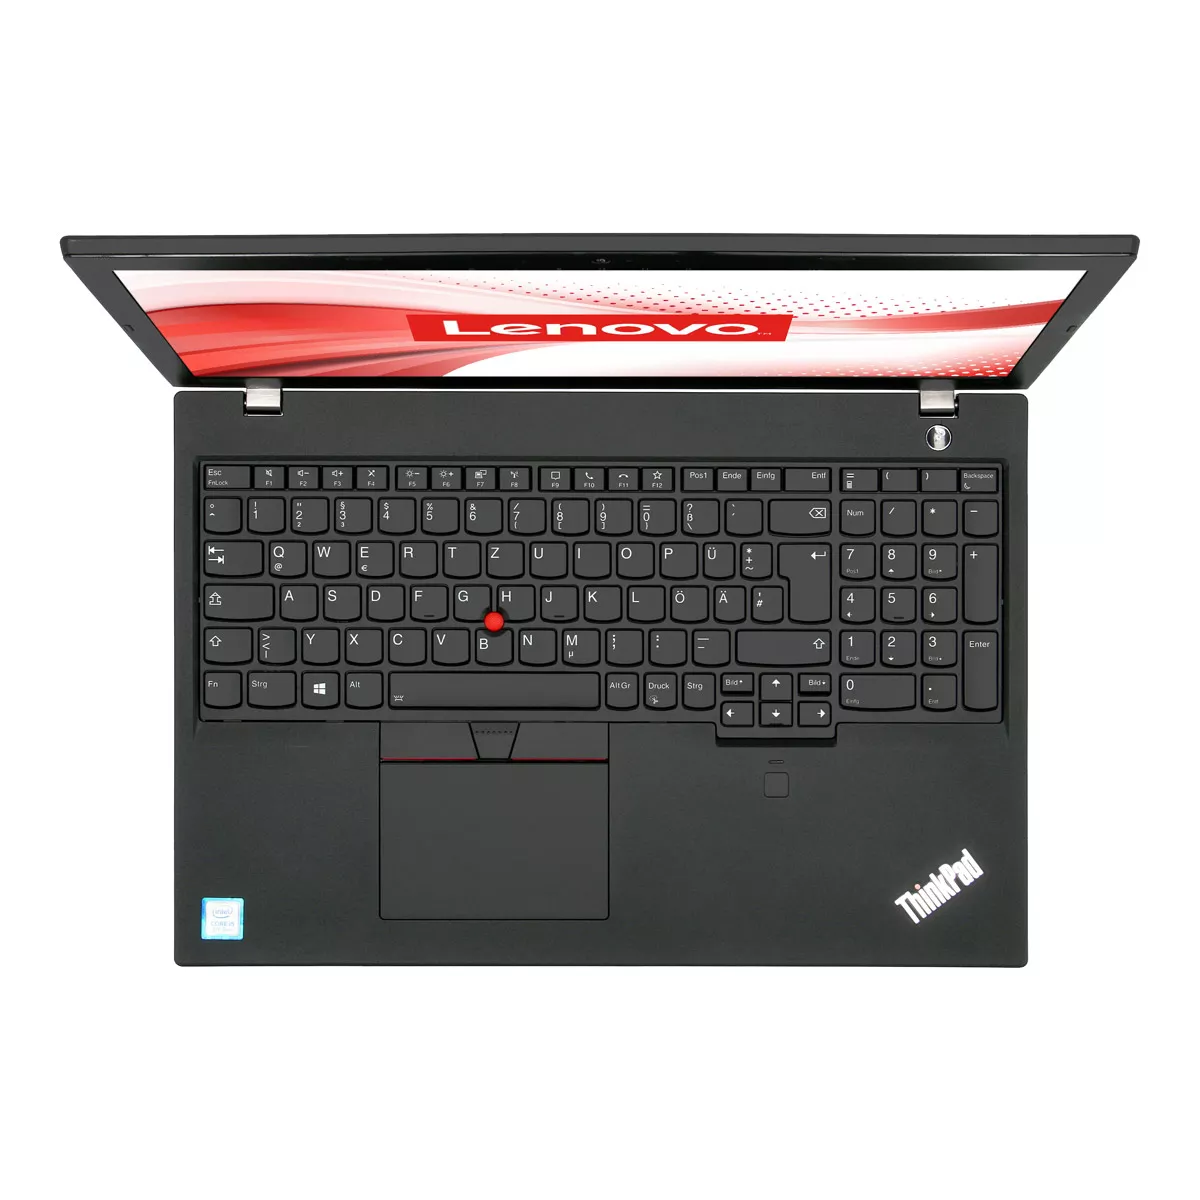 Lenovo ThinkPad L580 Core i5 8350U Full-HD 240 GB M.2 nVME SSD Webcam A